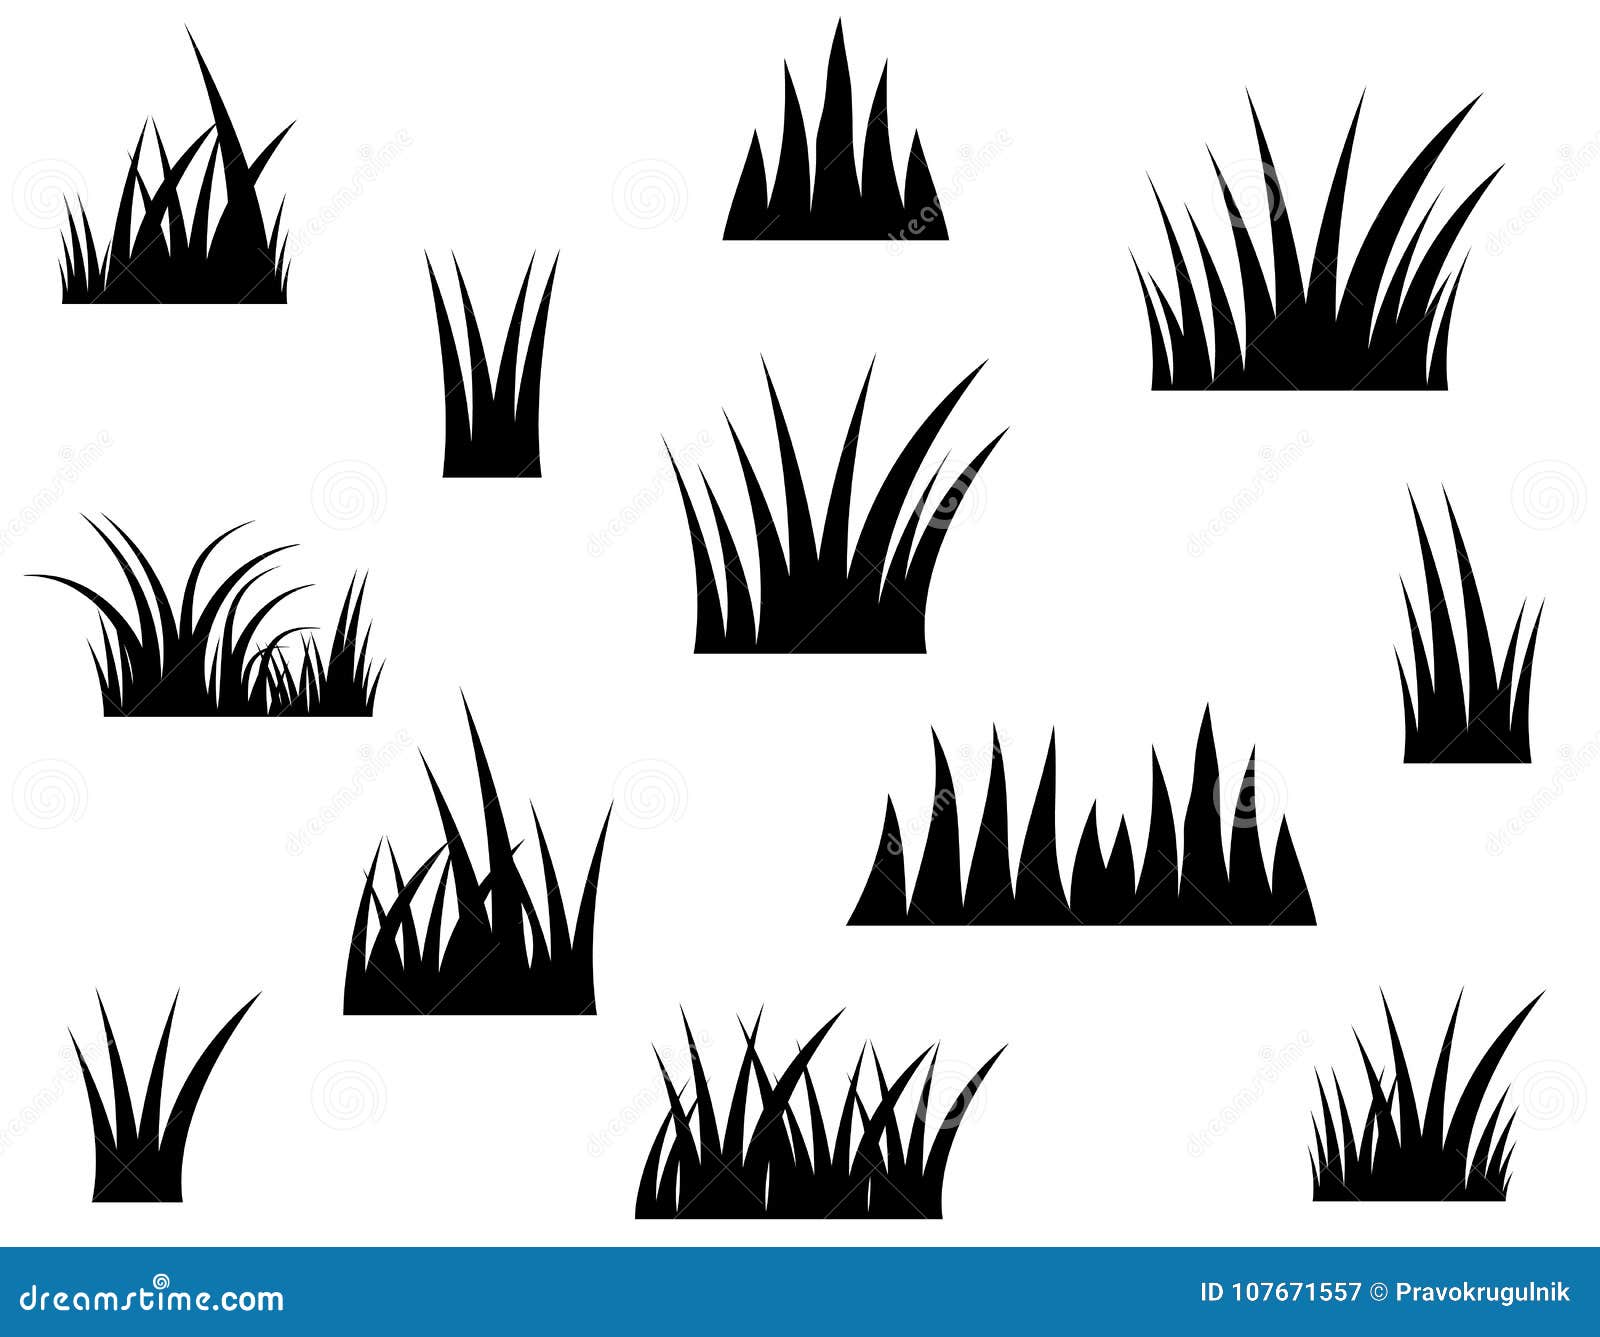 Black Vector Grass Silhouette Drawing Stock Vector - Illustration of black,  environment: 107671557